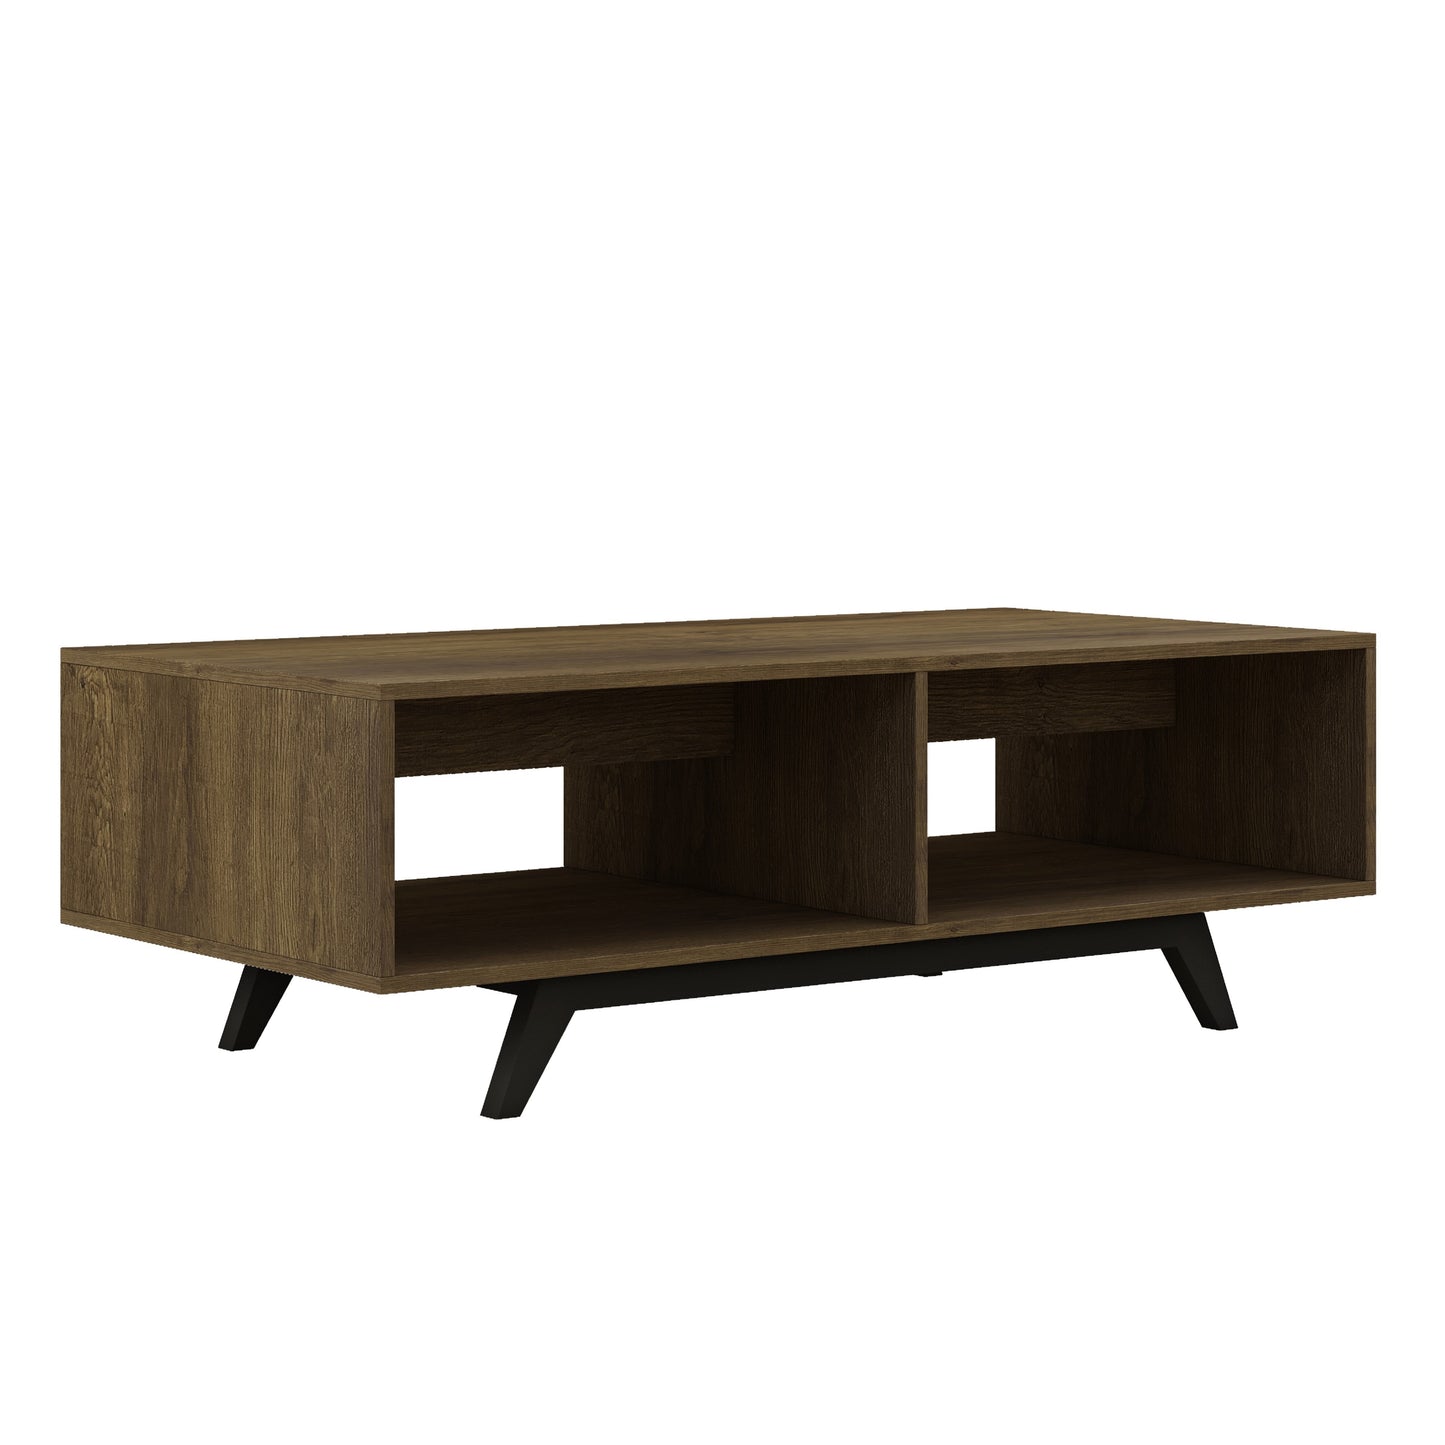 Tauris Metro Coffee Tables 1200mm Two Open Shelves, Solid Rubber Wood Legs, Dark Oak